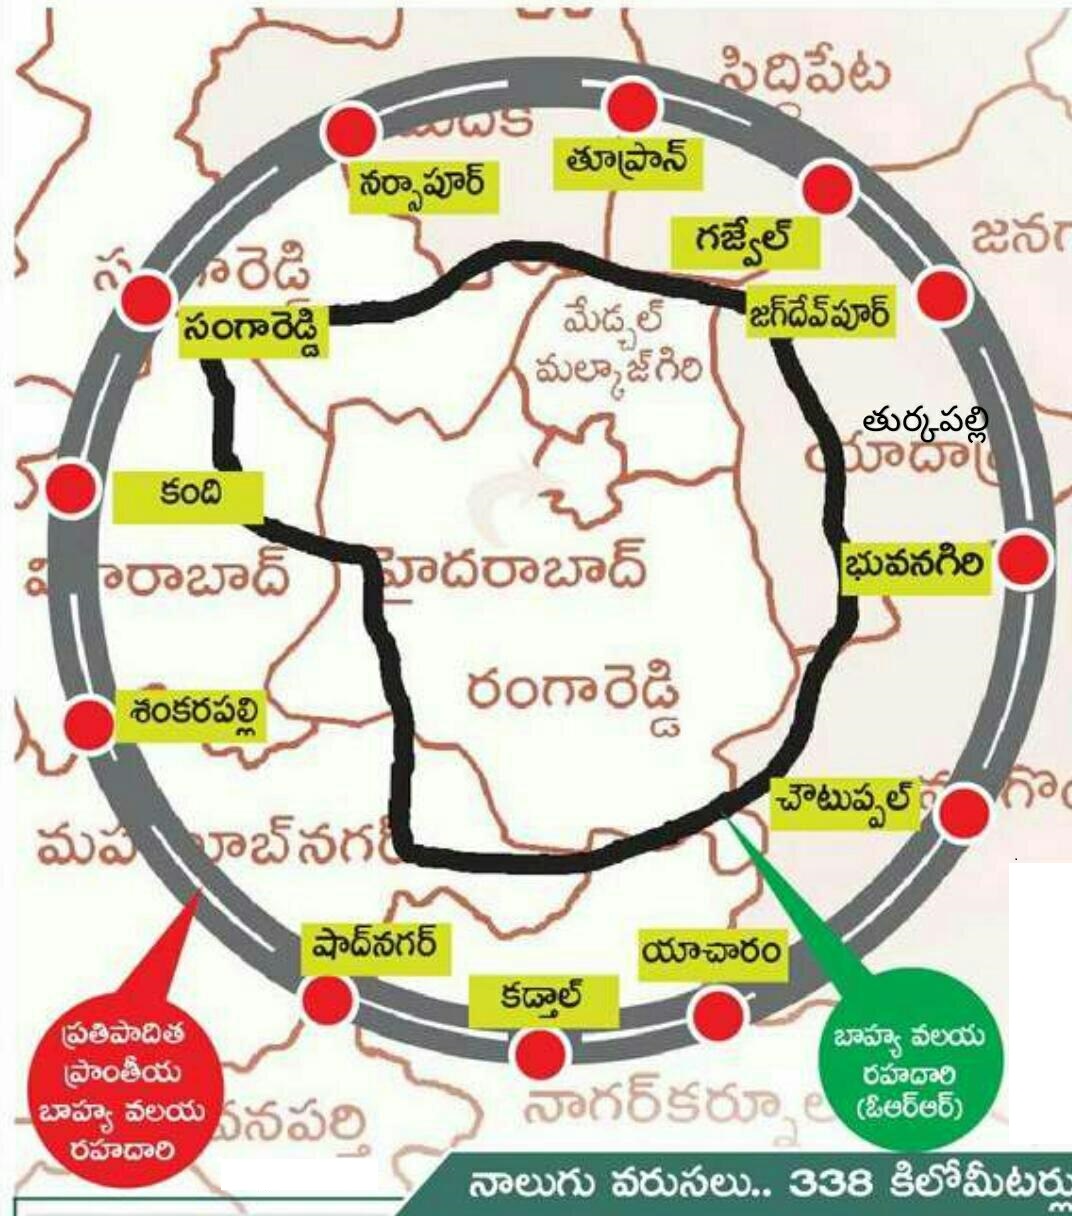 Centre okays Regional Ring Road for Hyderabad